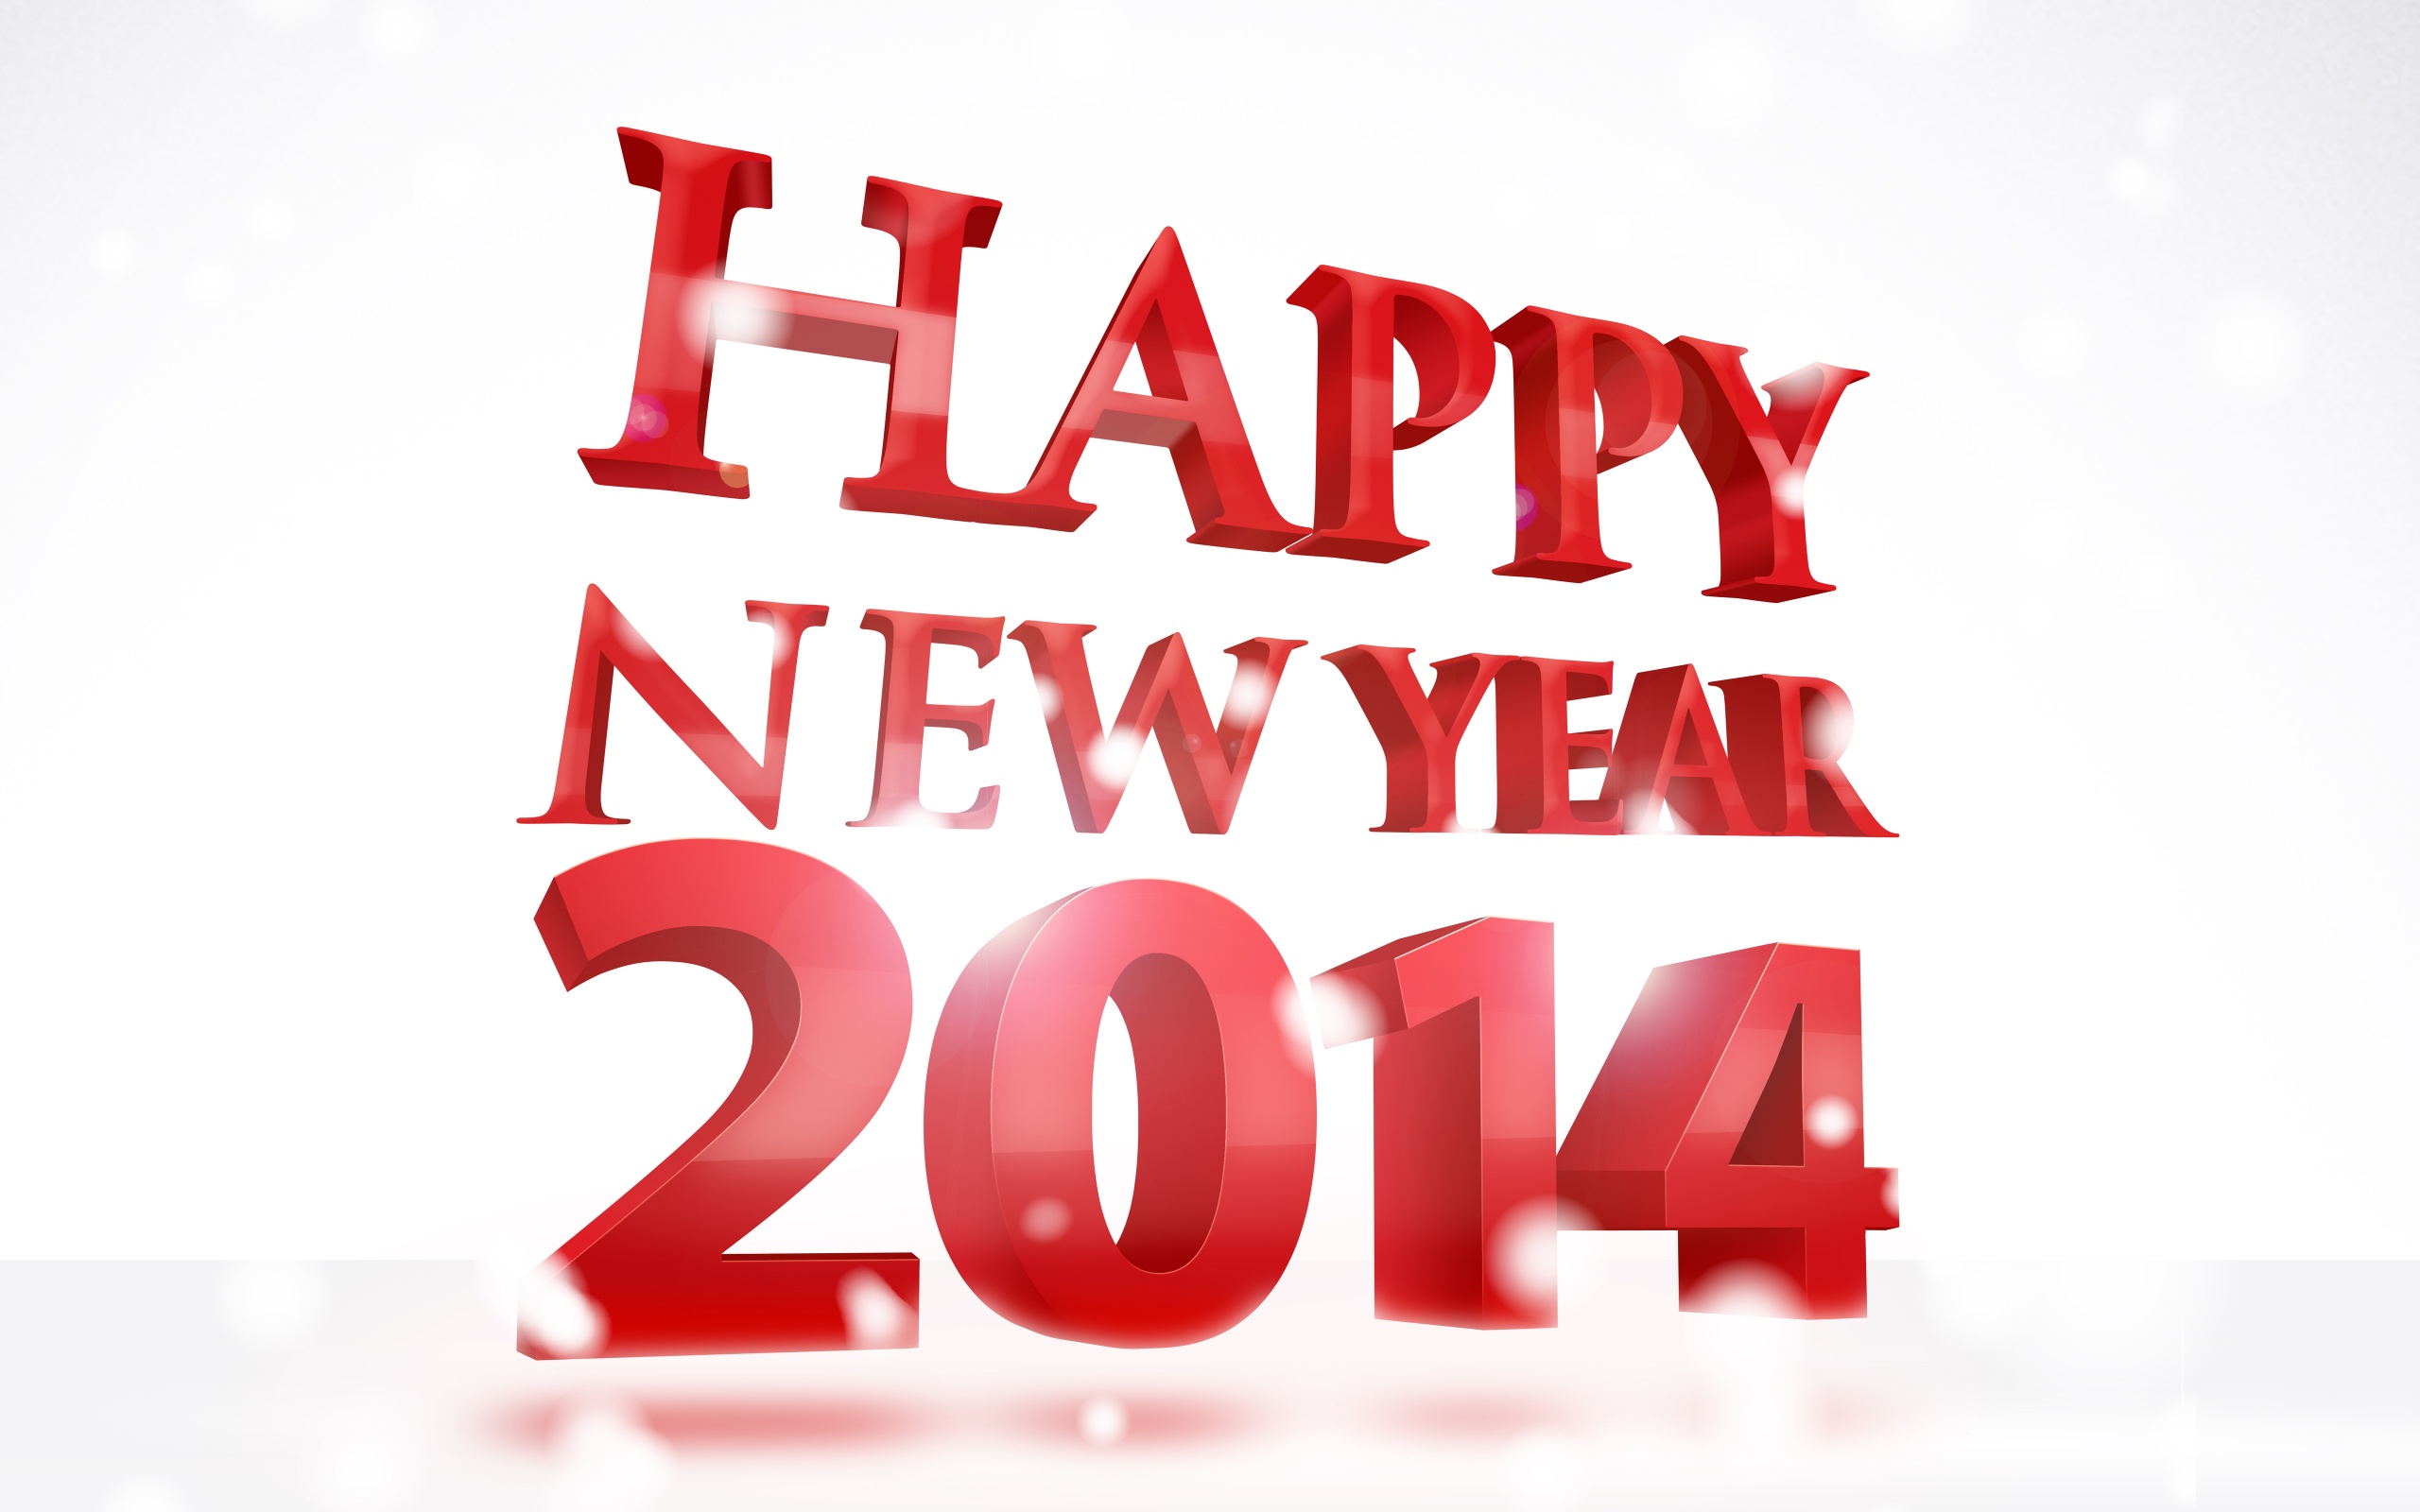 Happy New Year - 2014